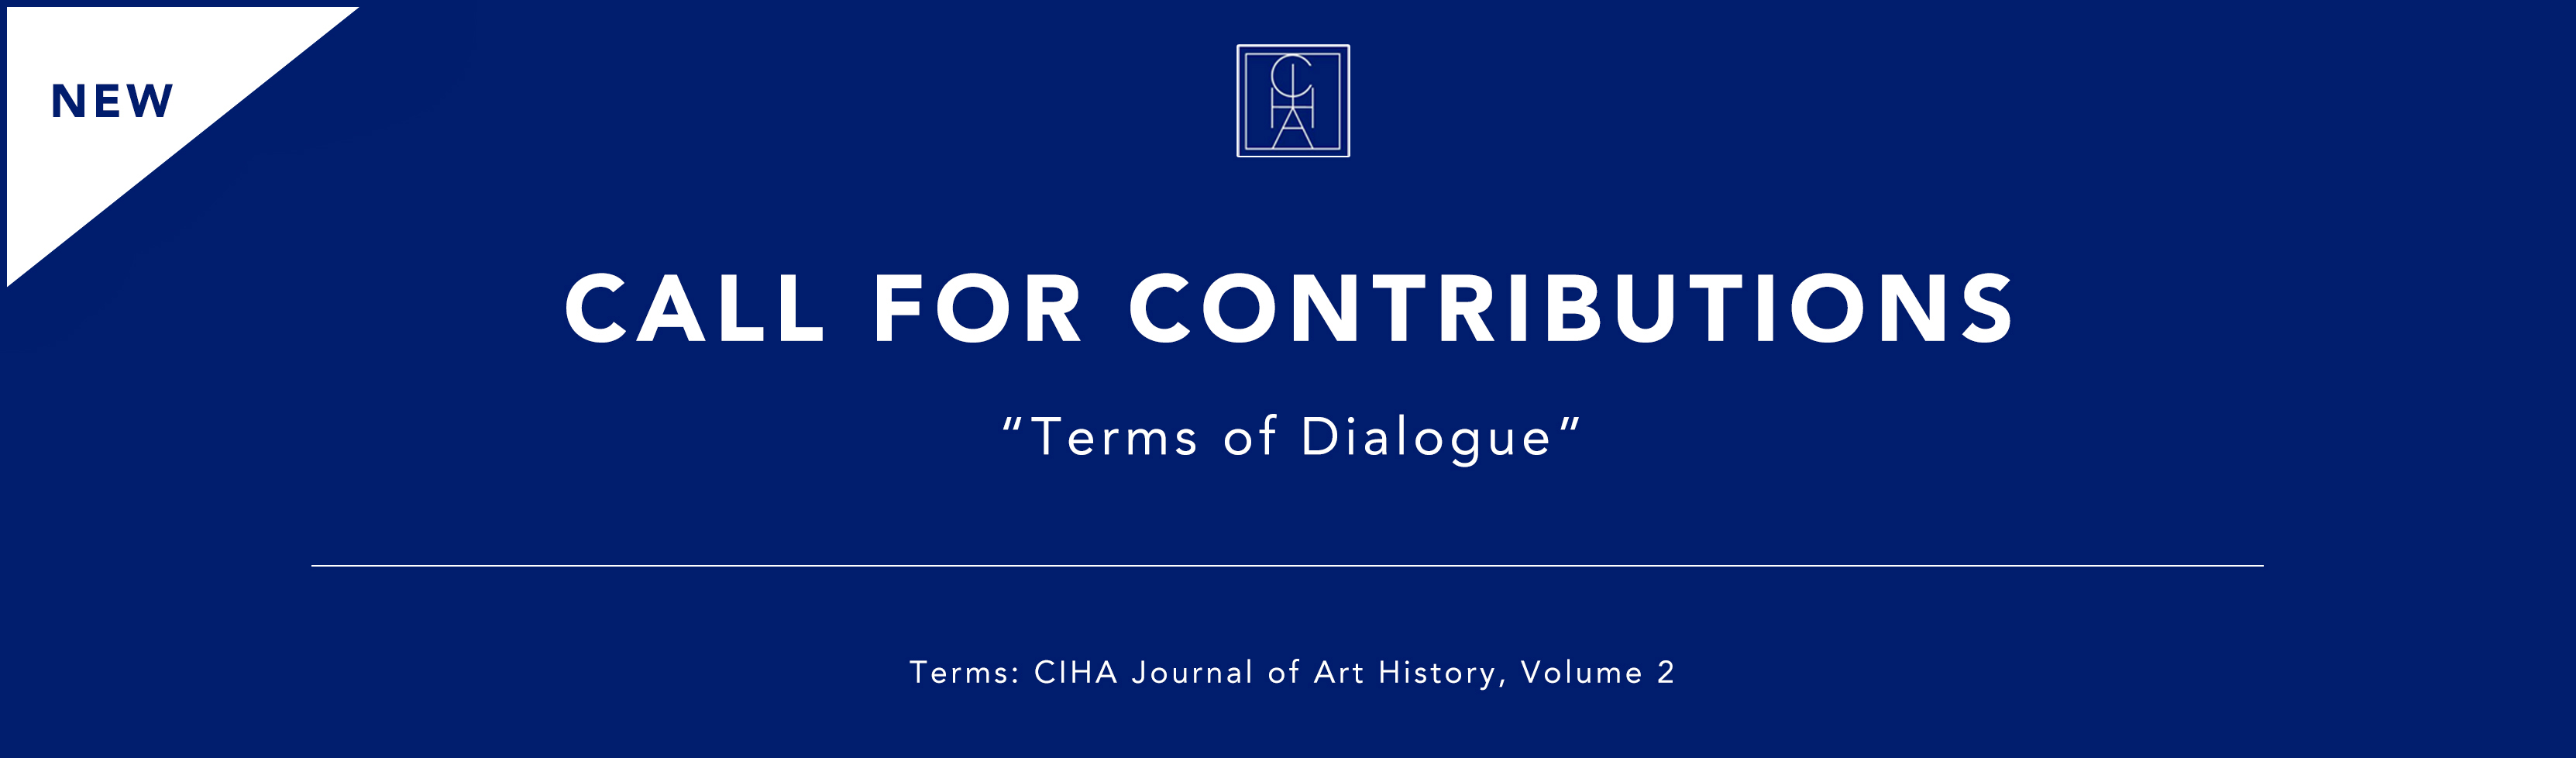 CFP Terms: CIHA Journal of Art History Vol.2